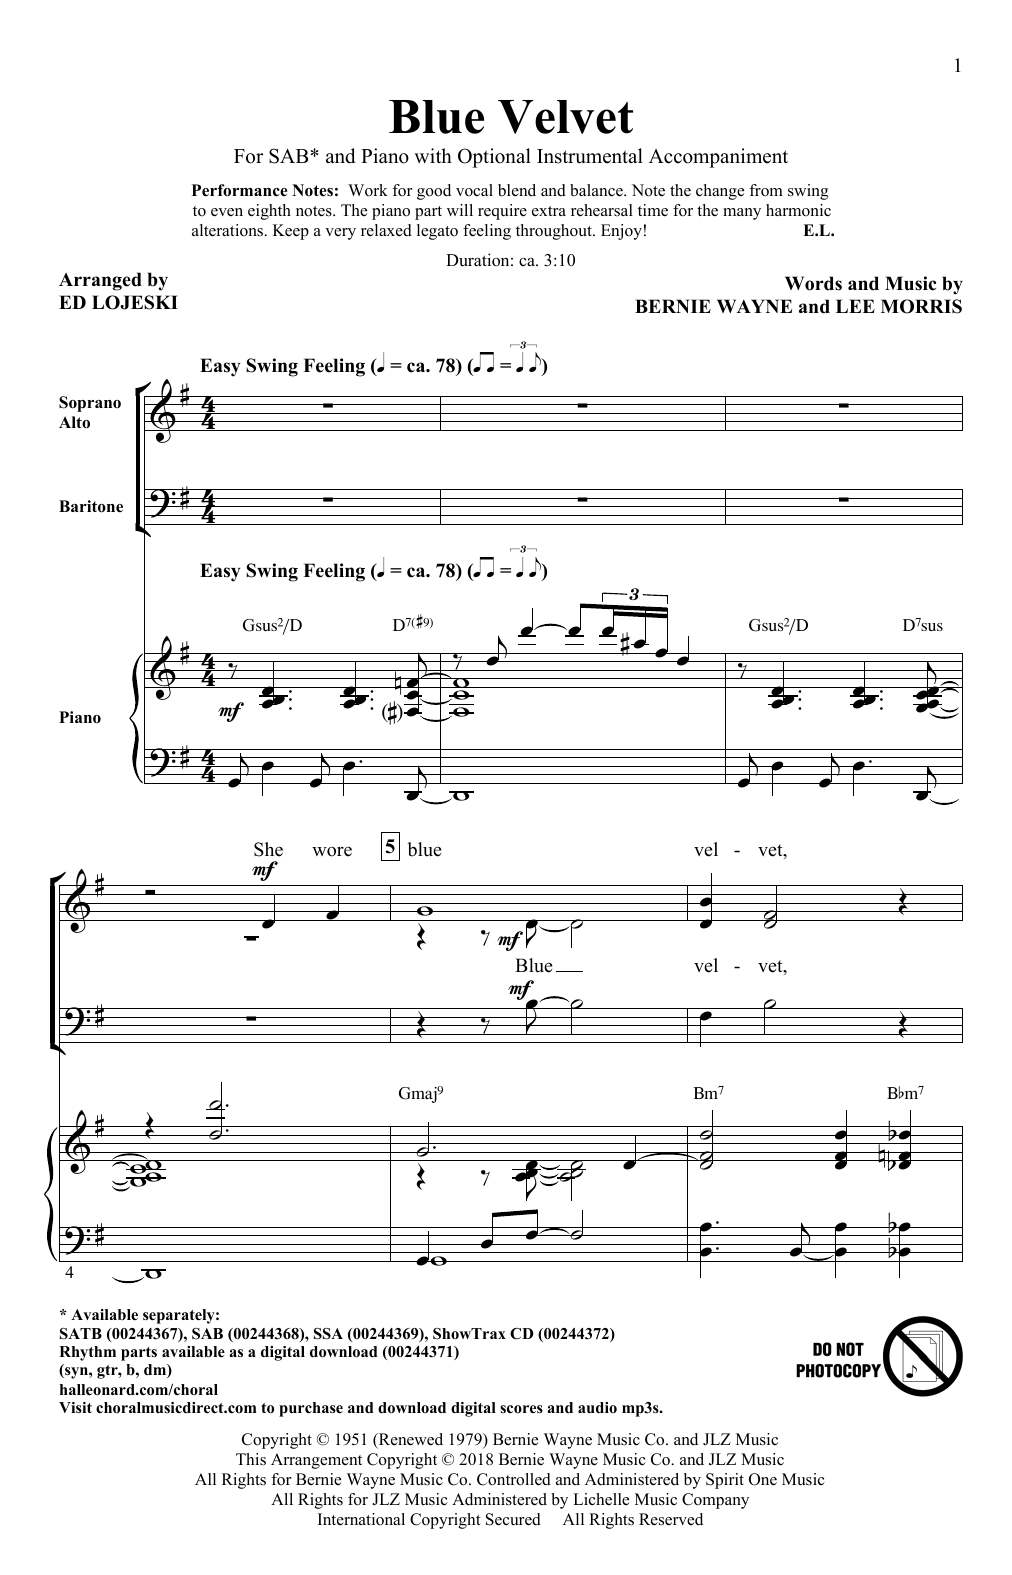 Ed Lojeski Blue Velvet Sheet Music Notes & Chords for SAB - Download or Print PDF